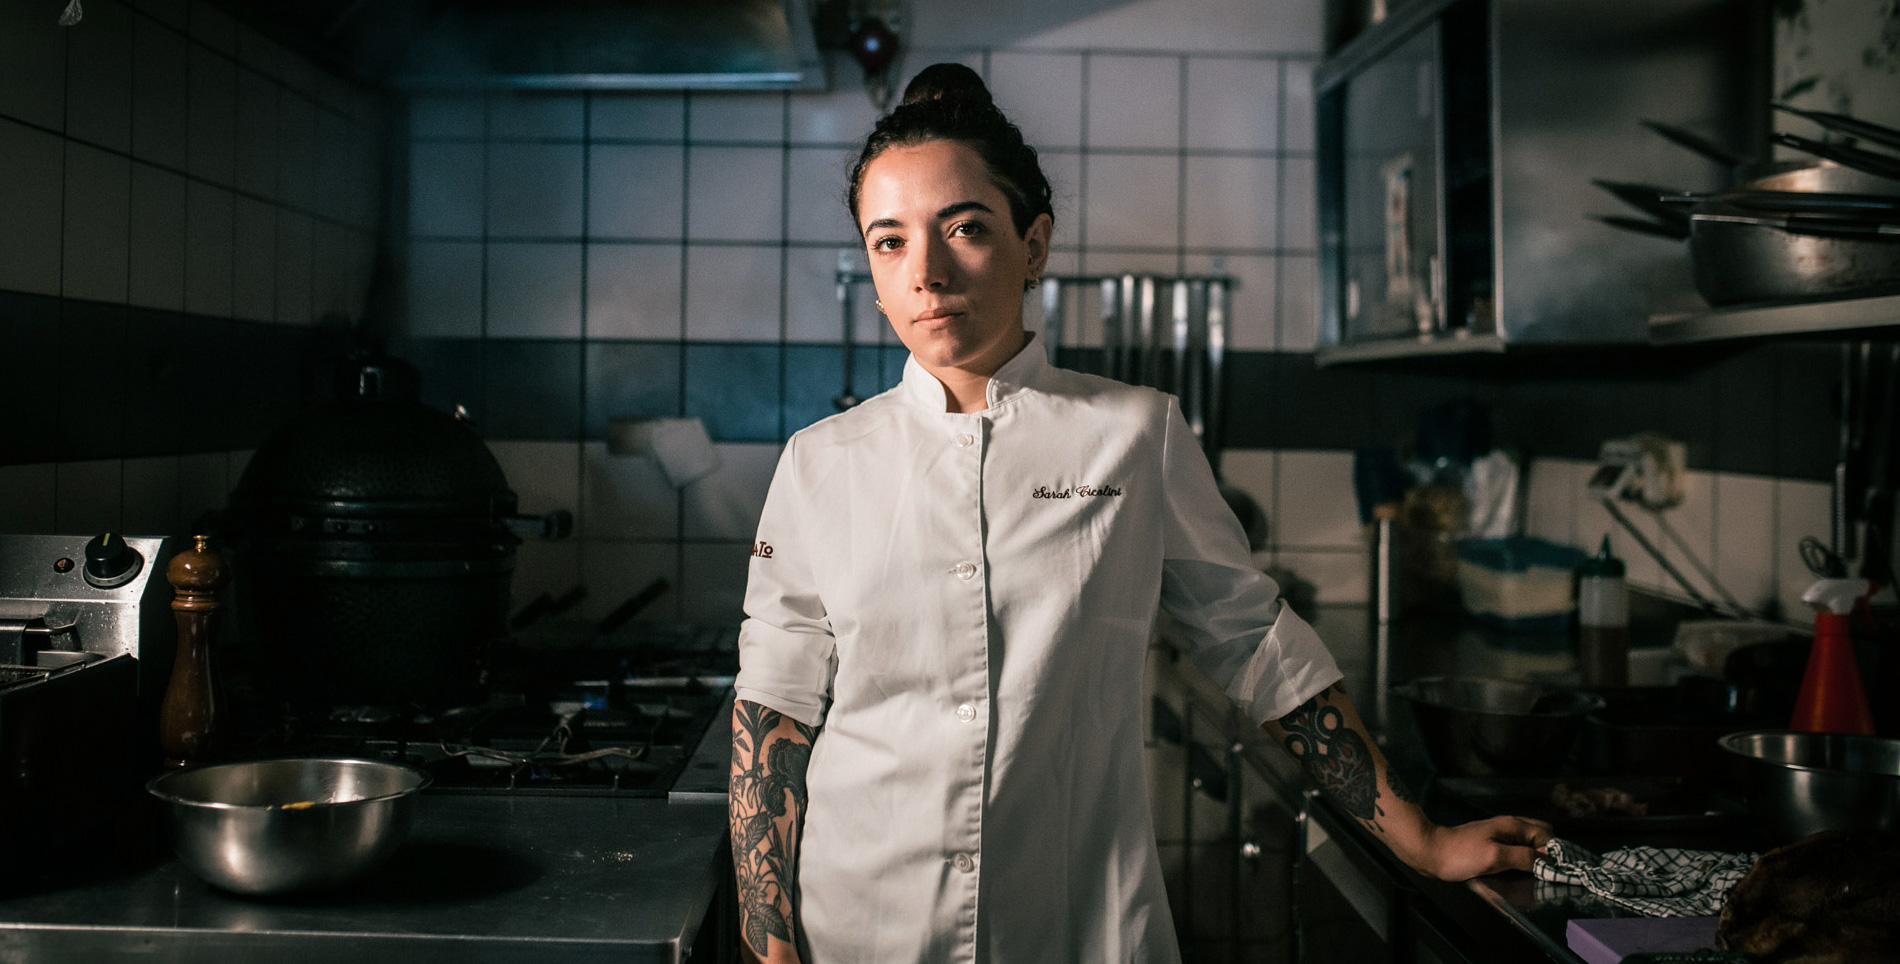 Making Amatriciana and Carbonara With Chef Sarah Cicolini